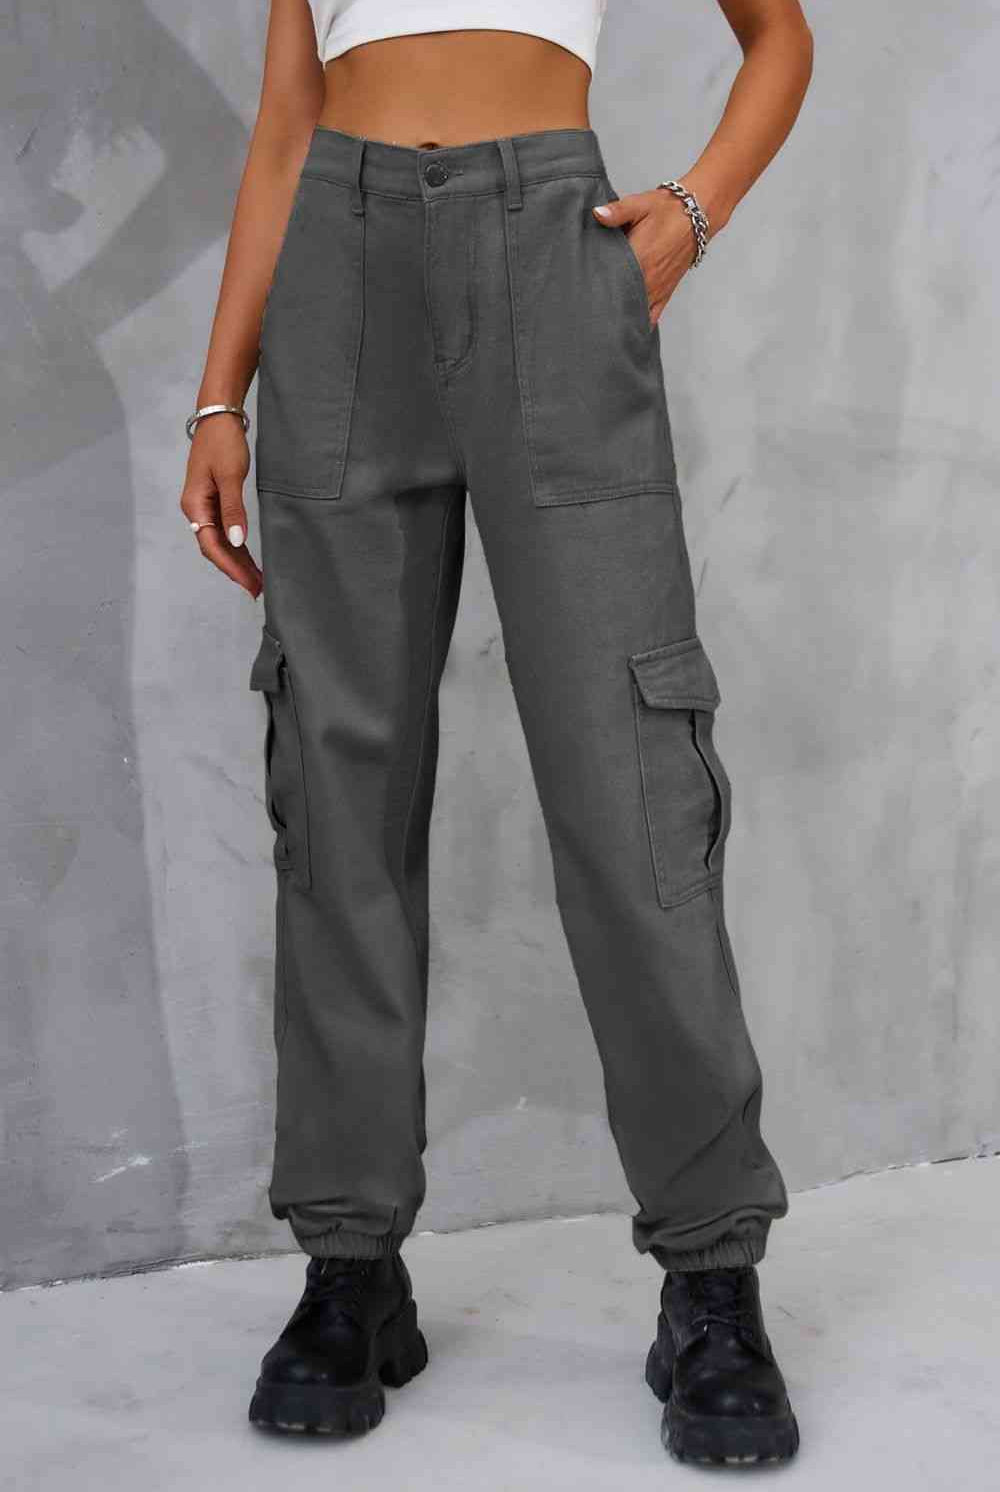 Light Slate Gray Buttoned High Waist Jeans with Pockets Denim